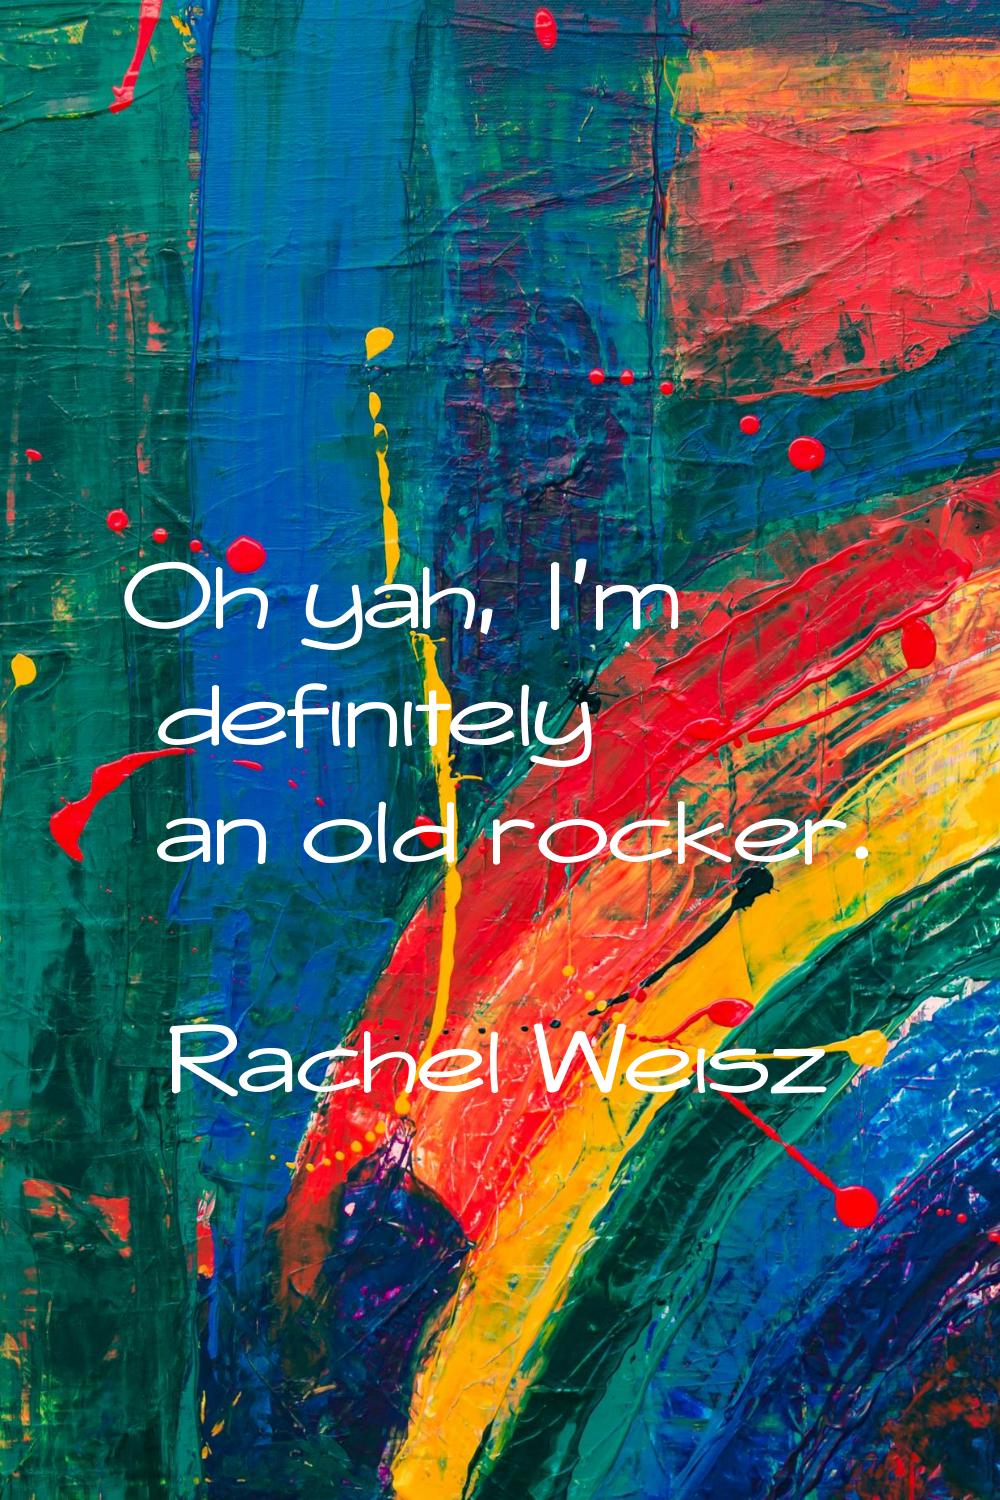 Oh yah, I'm definitely an old rocker.